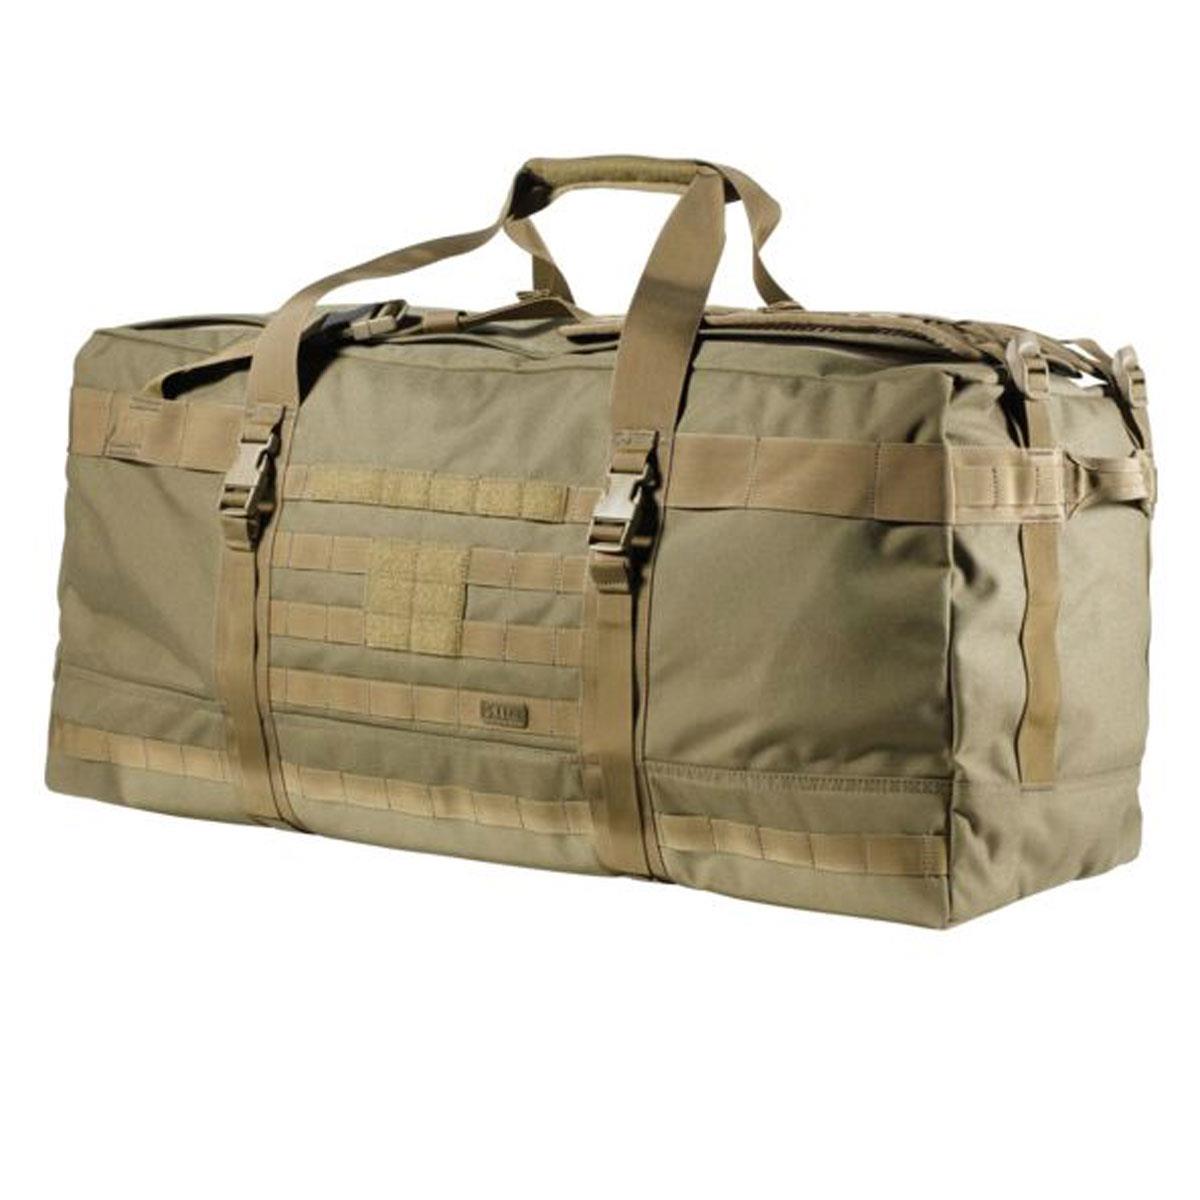 5.11 Tactical RUSH LBD XRAY Duffel Bag, Sandstone -  56295-328-1 SZ